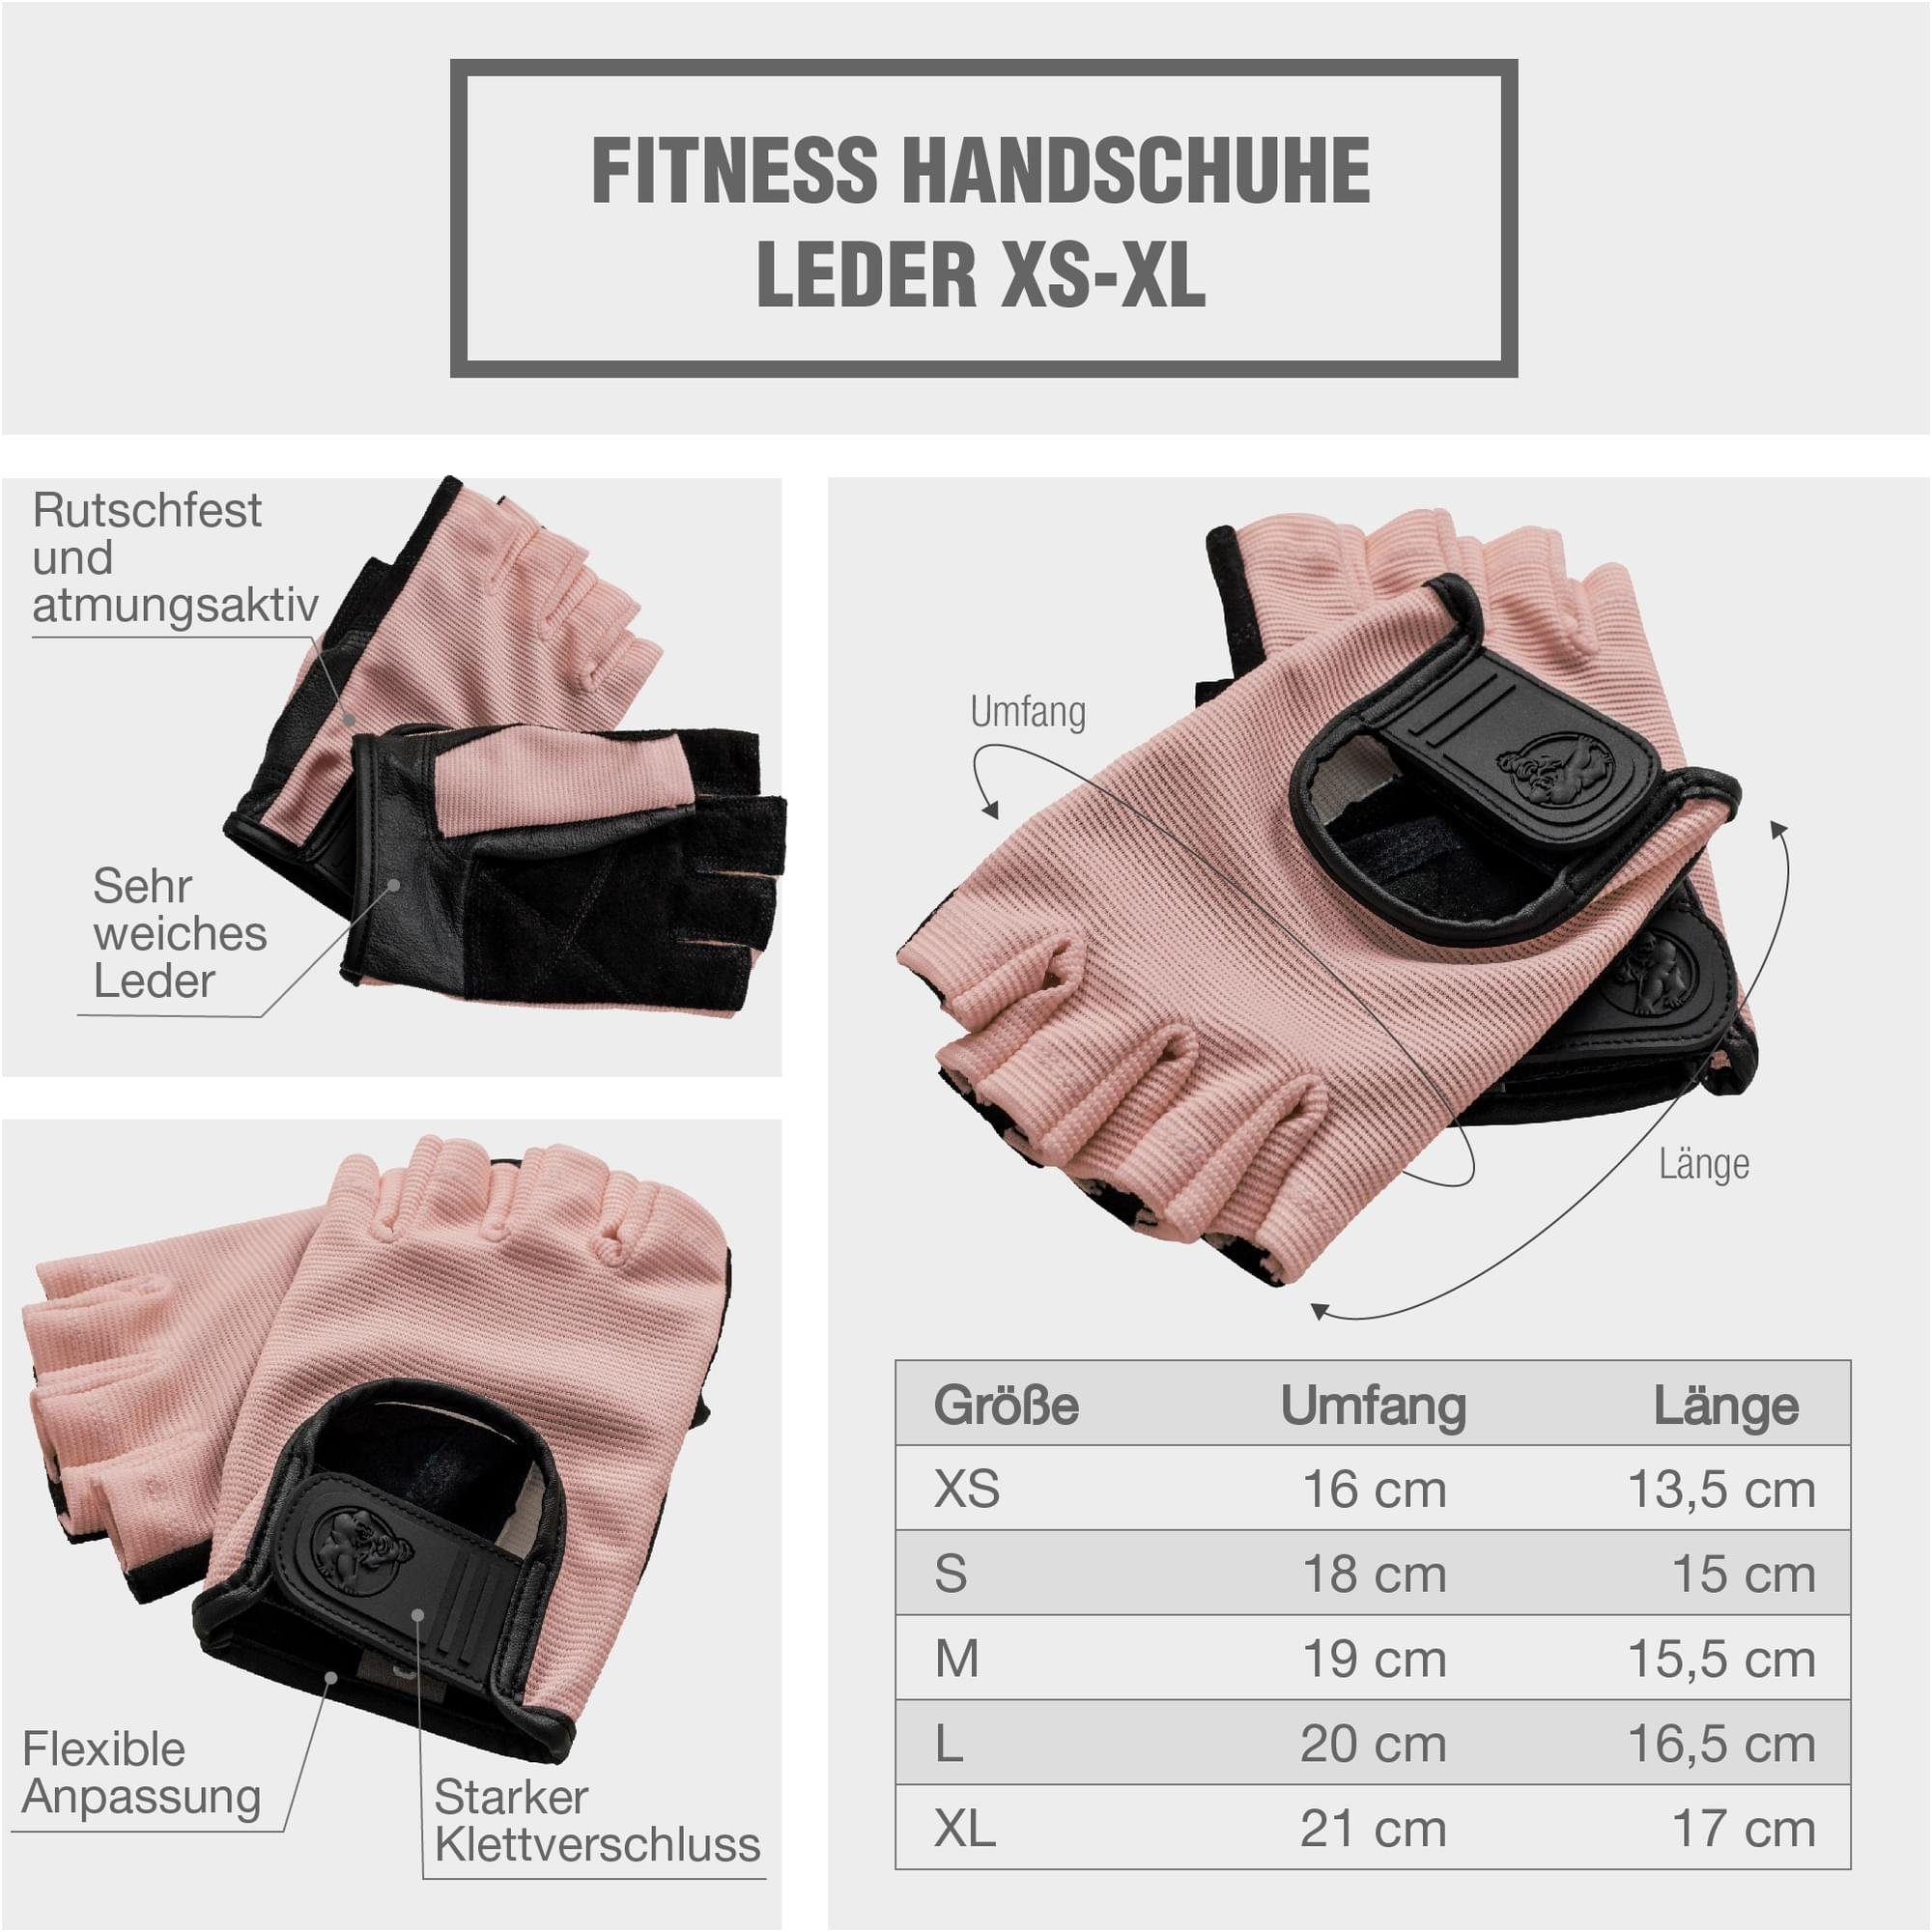 Fitness Farbwahl Leder, Sporthandschuhe Trainingshandschuhe Handschuhe - GORILLA SPORTS Rosa - XS/S/M/L/XL,